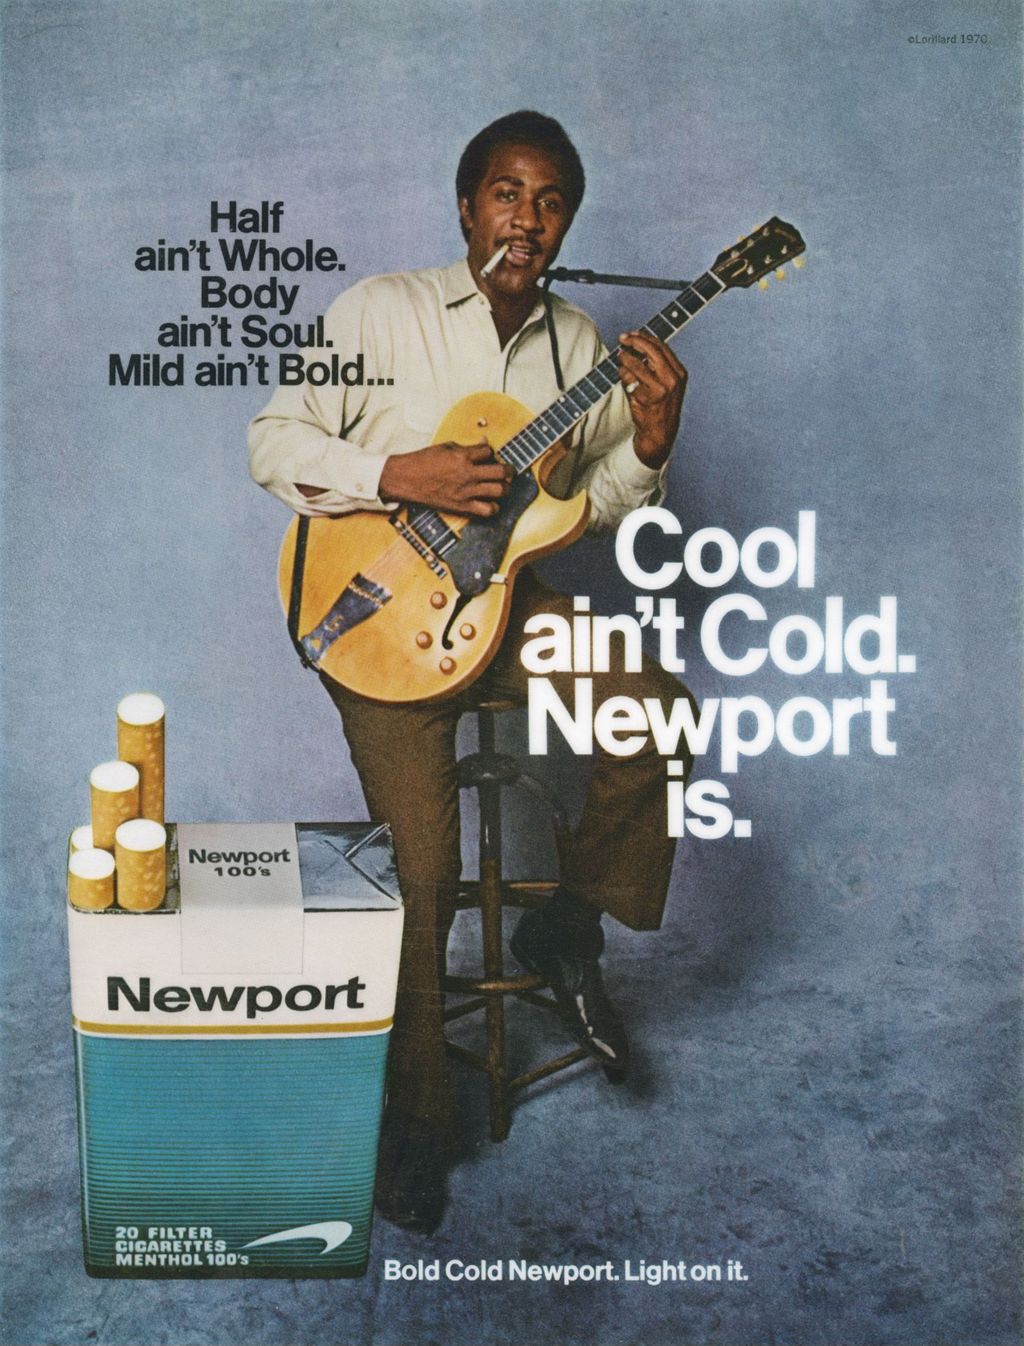 Miniature of Cool ain't Cold, cigarette advertisement